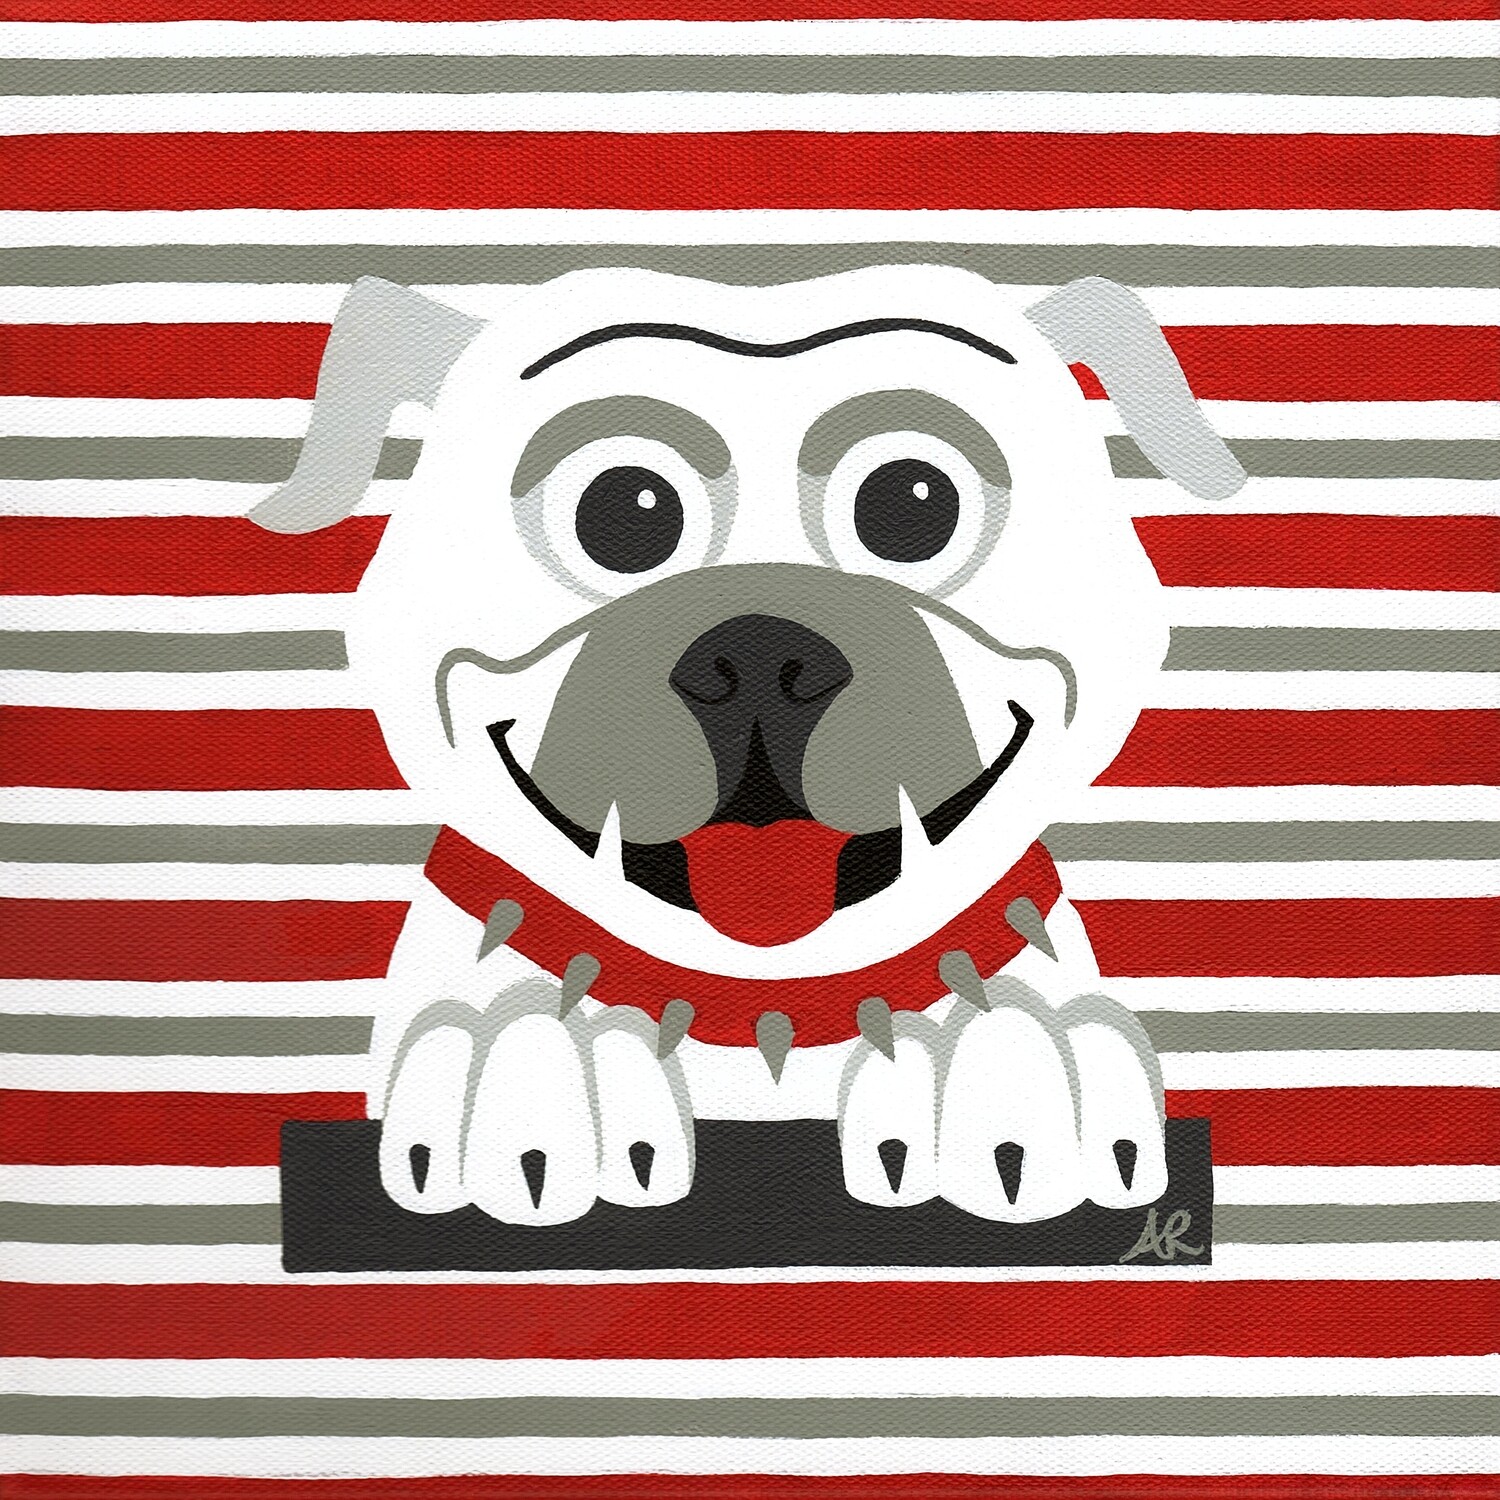 Red & White Bulldog w/ Stripes